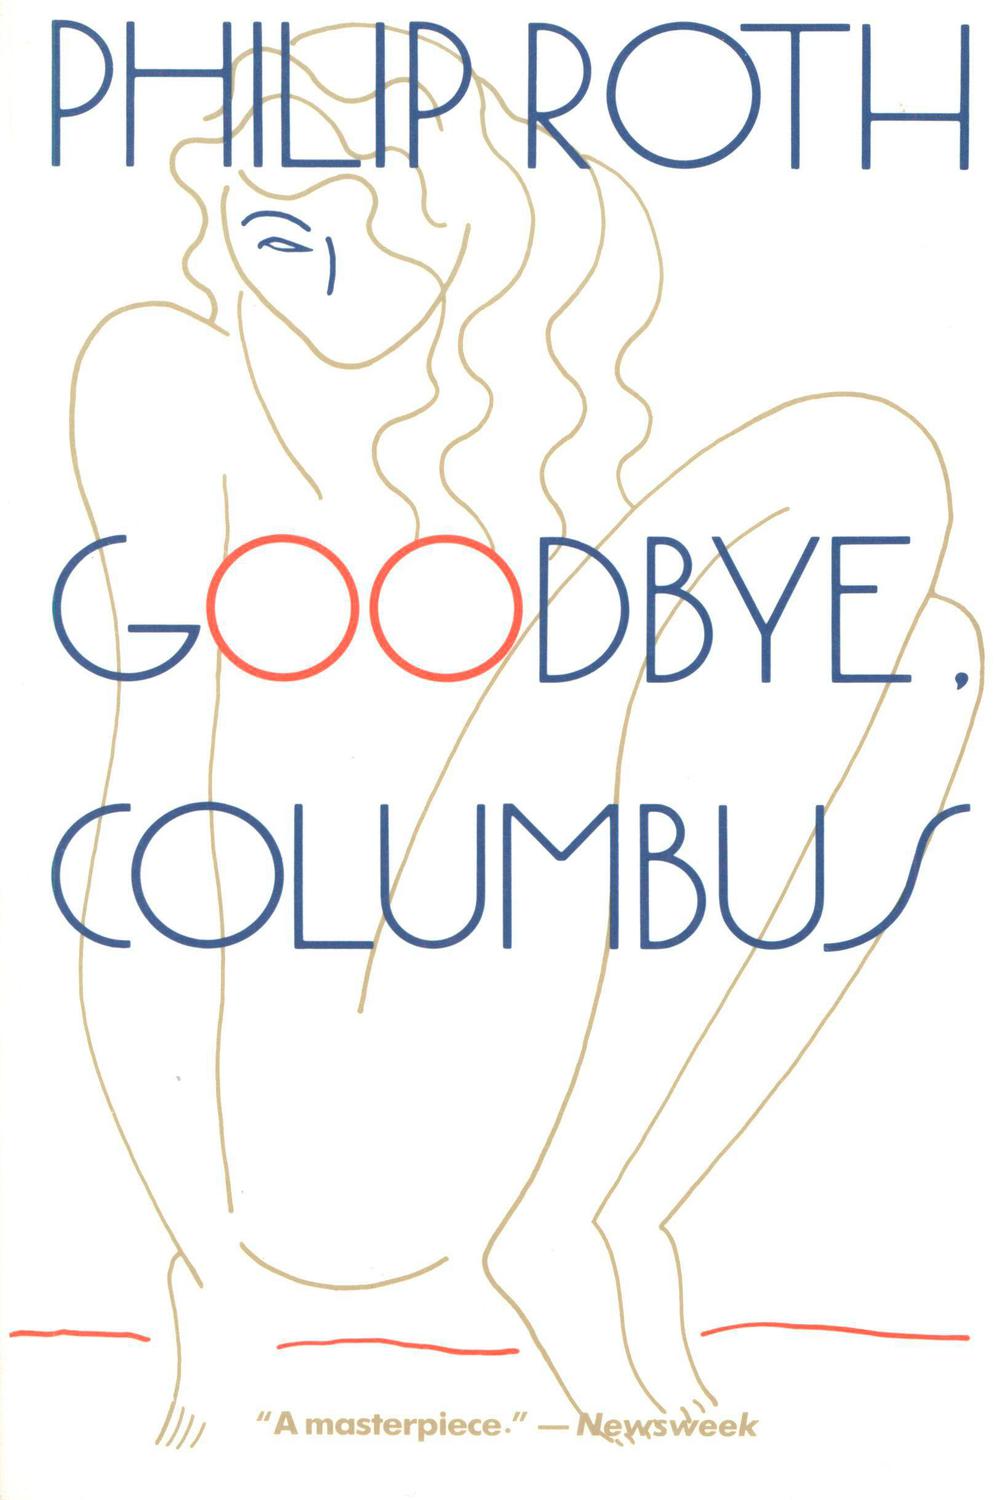 Goodbye, Columbus - Roth, Philip